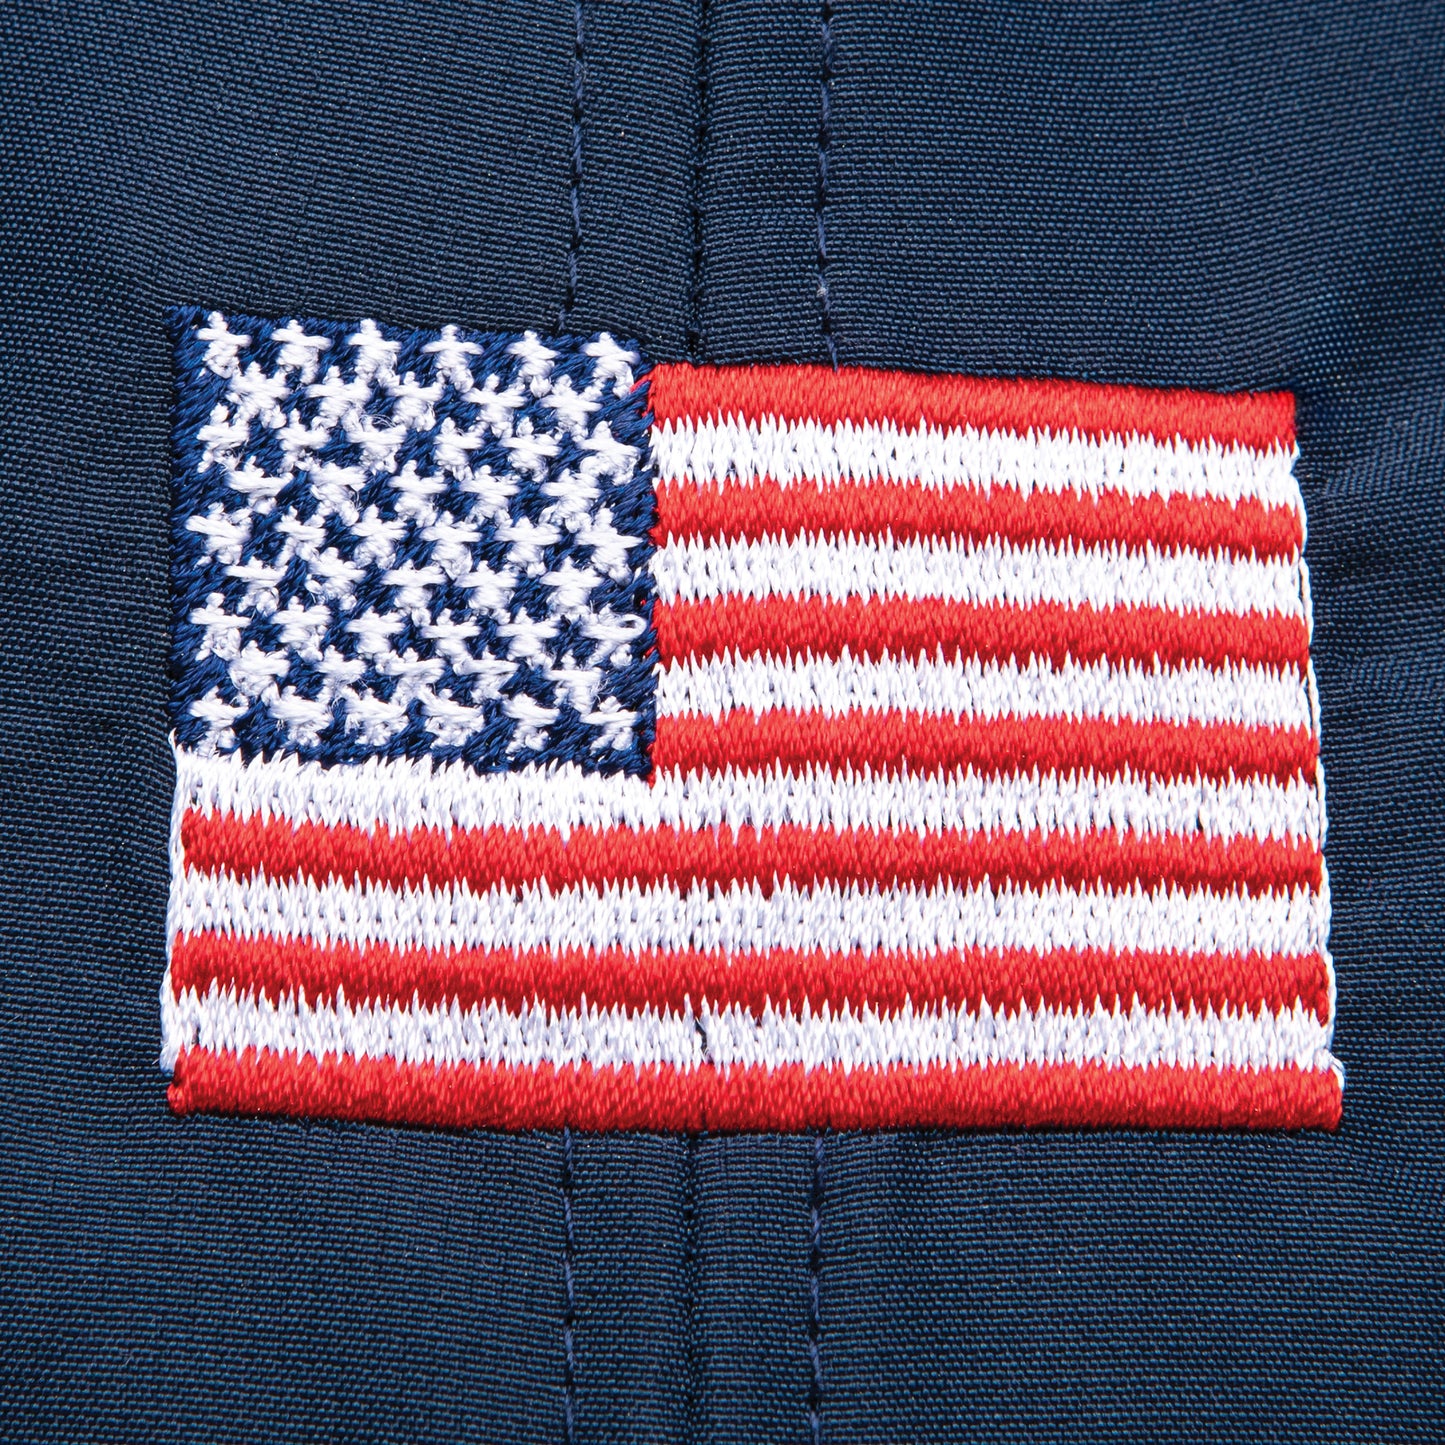 American Flag Performance Hat - Navy